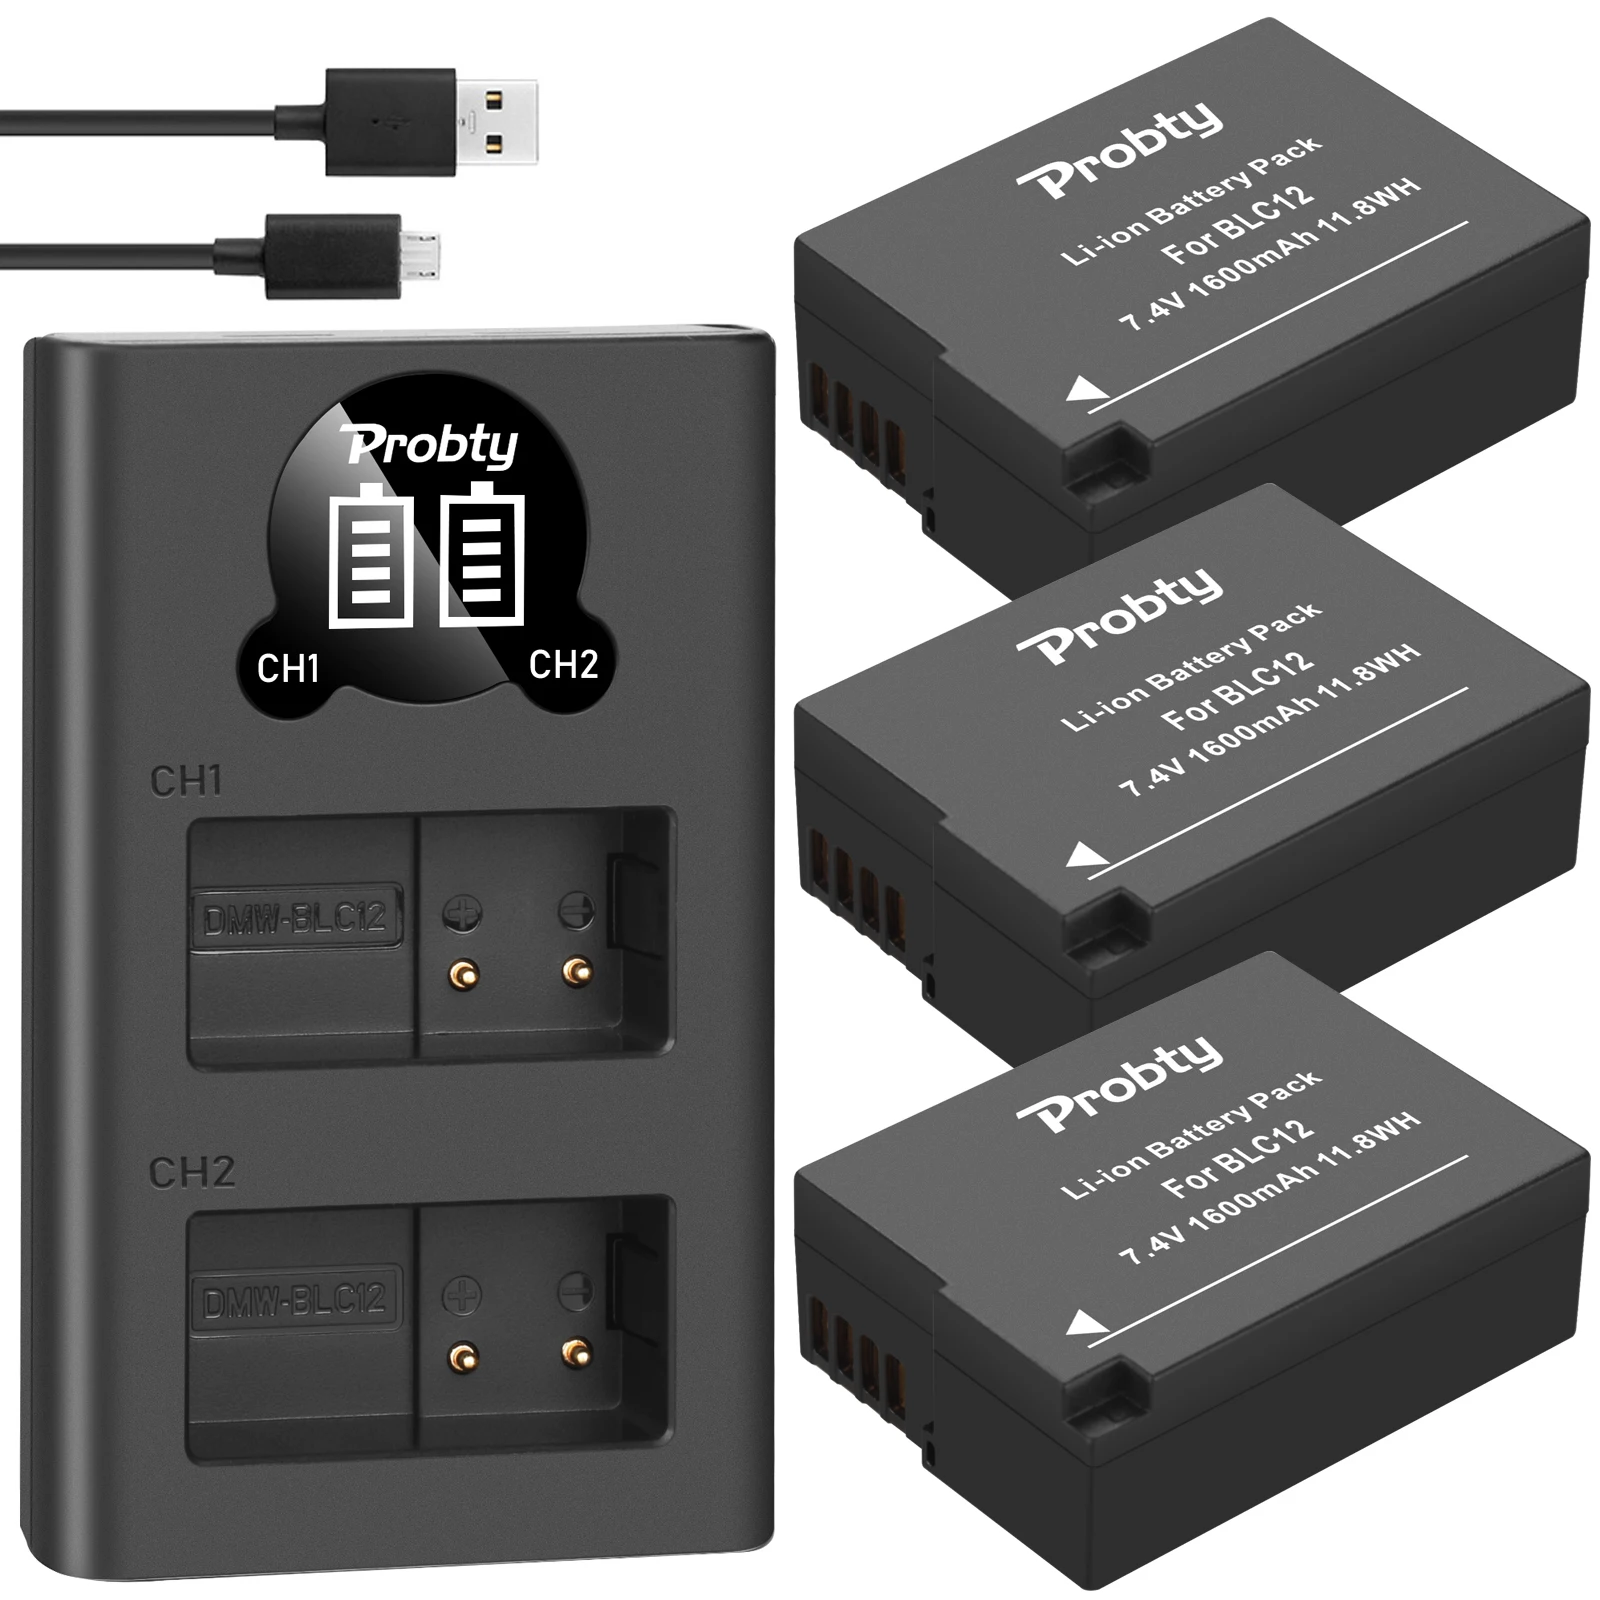 

DMW-BLC12 BLC12 DMW-BLC12E DMW-BLC12PP аккумулятор + двойное зарядное устройство для Panasonic Lumix DMC-G85,FZ200,FZ1000,G5,G6,G7,GH2,GX8